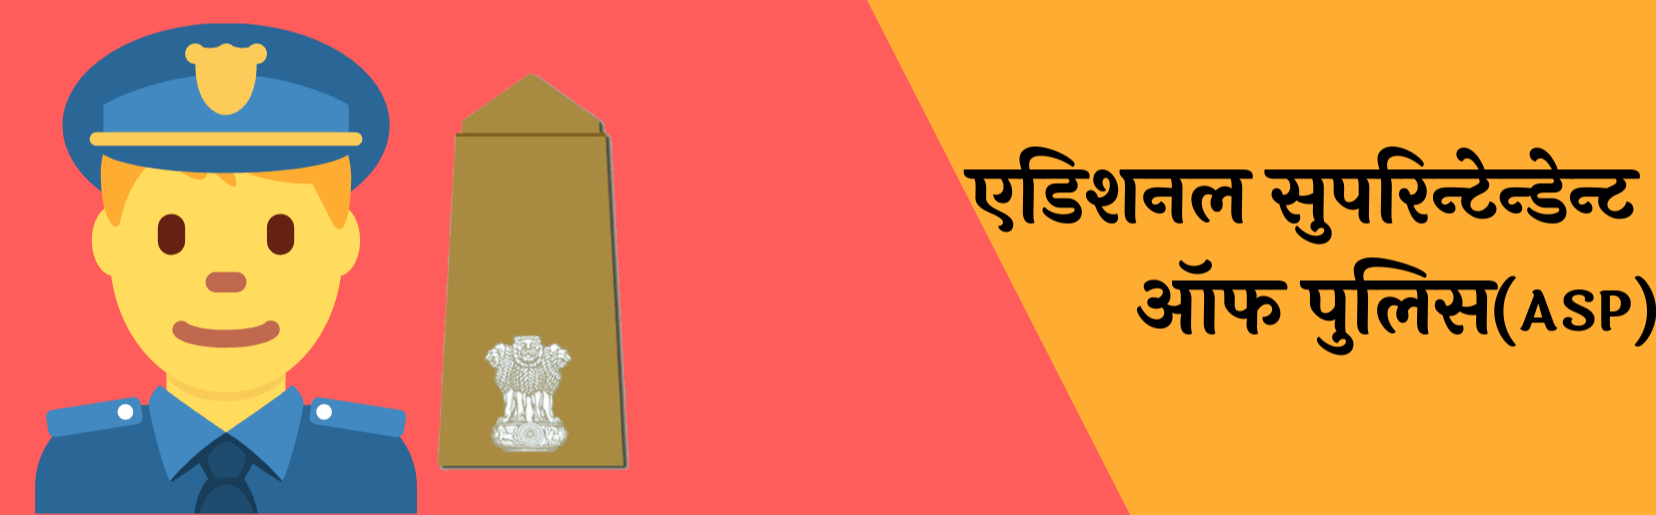 ASP rank list hindi